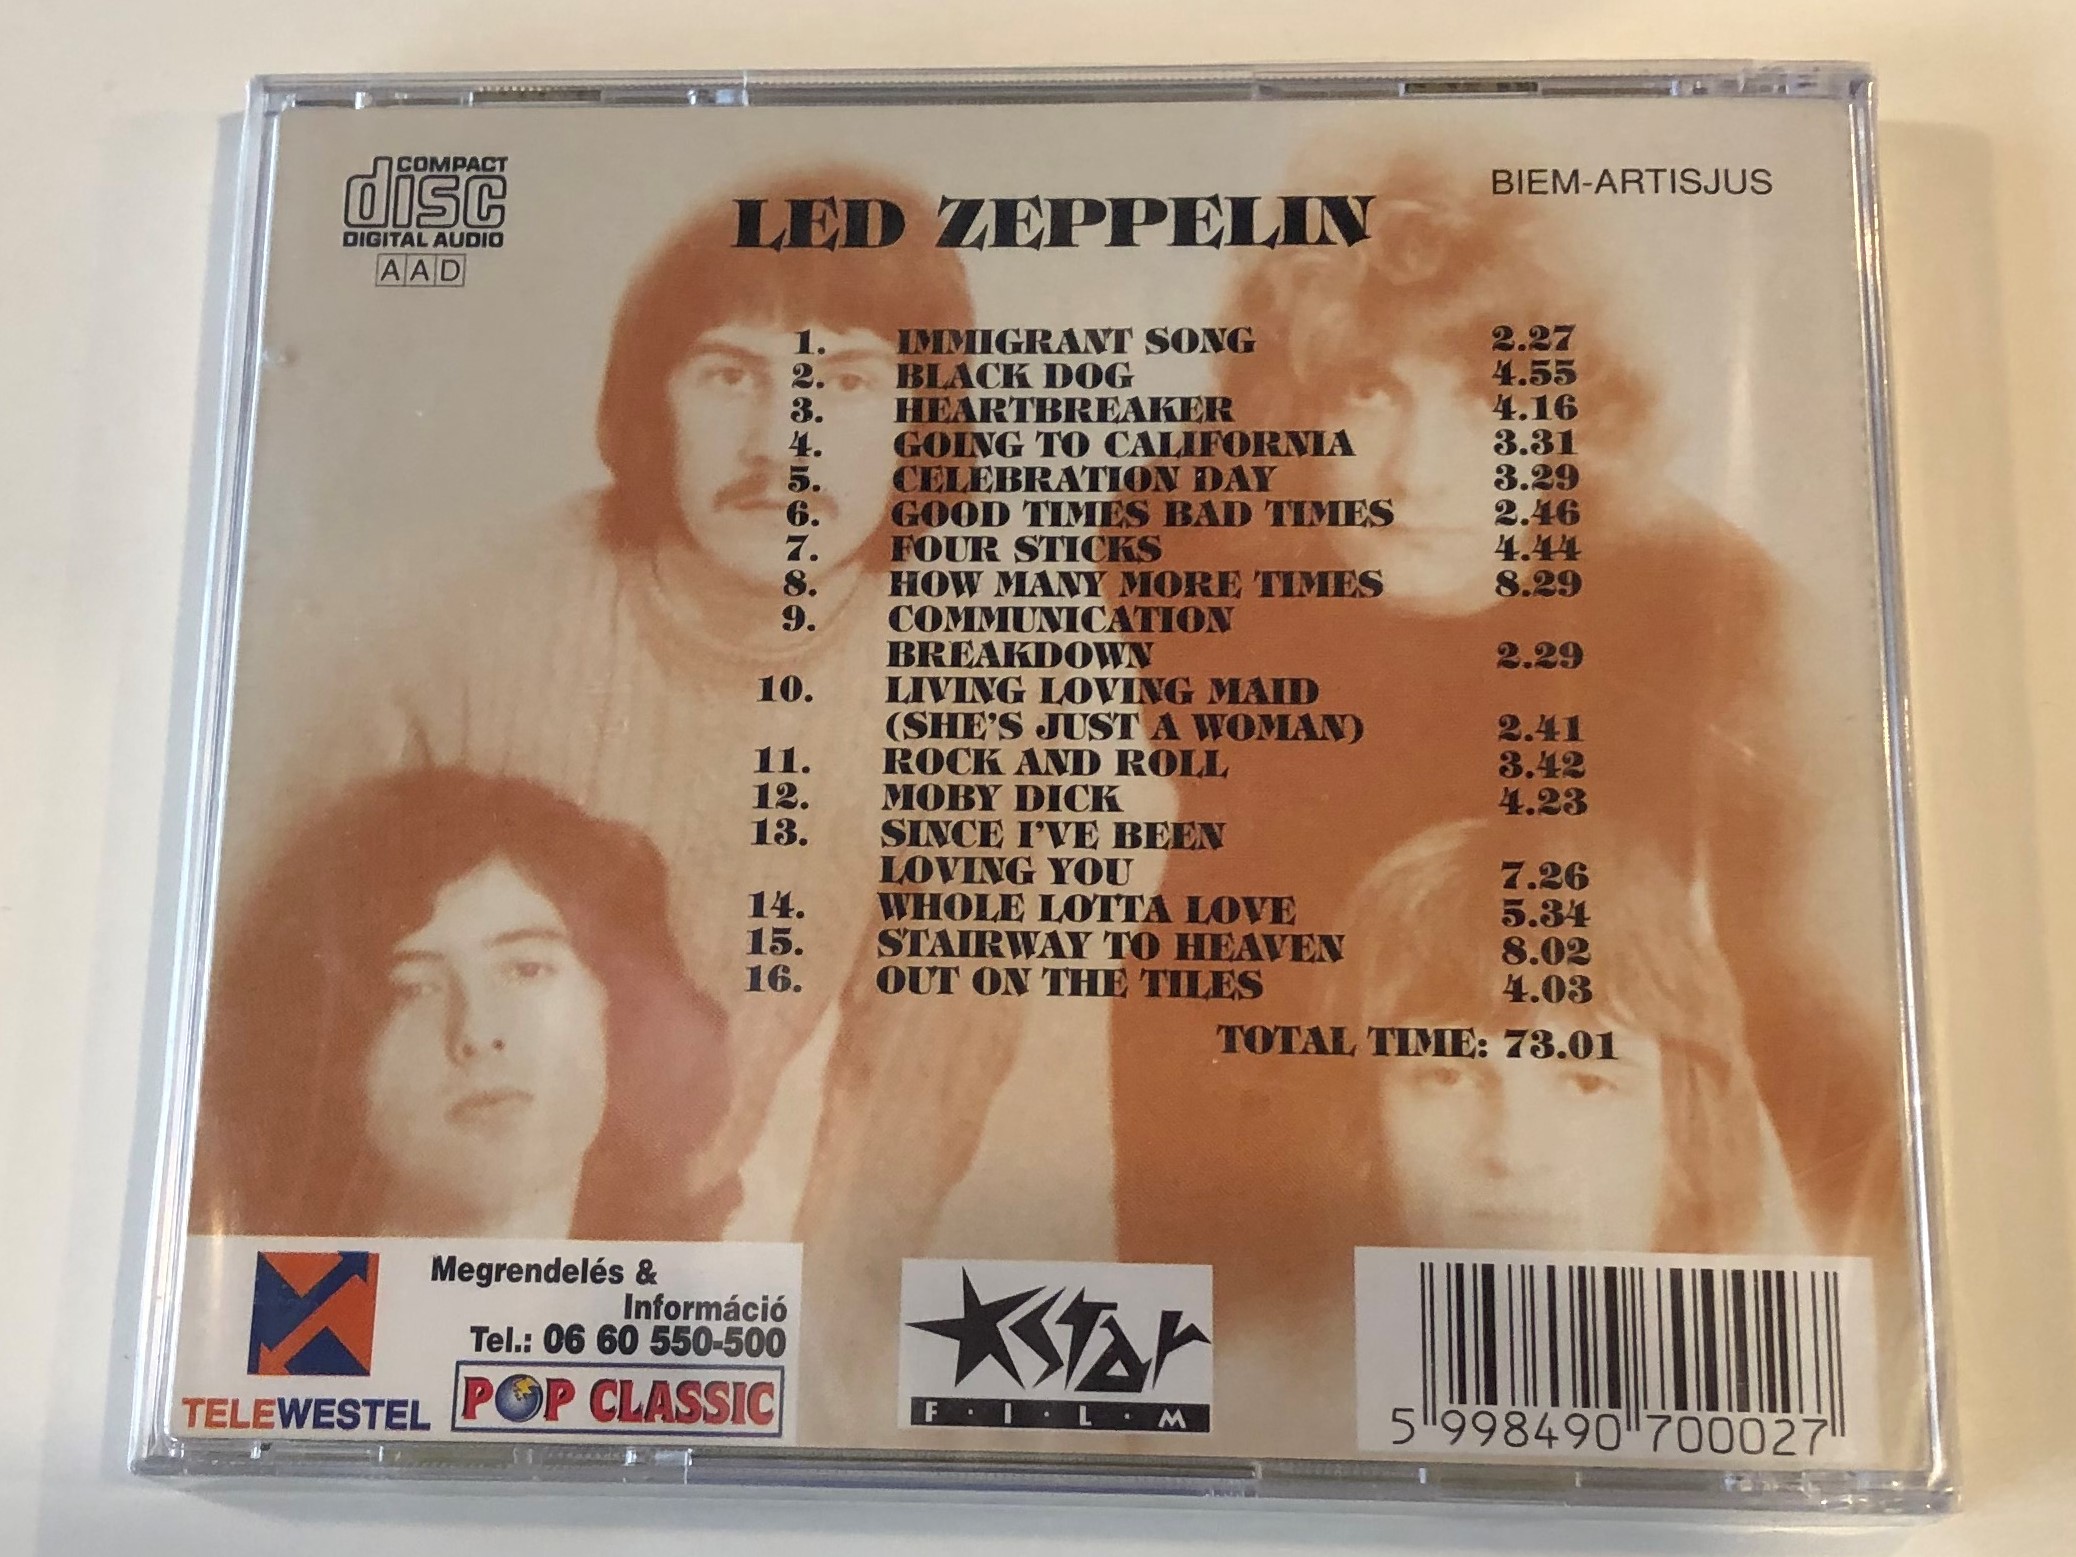 led-zeppelin-best-of-pop-classic-total-time-7301-audio-cd-5998490700027-2-.jpg